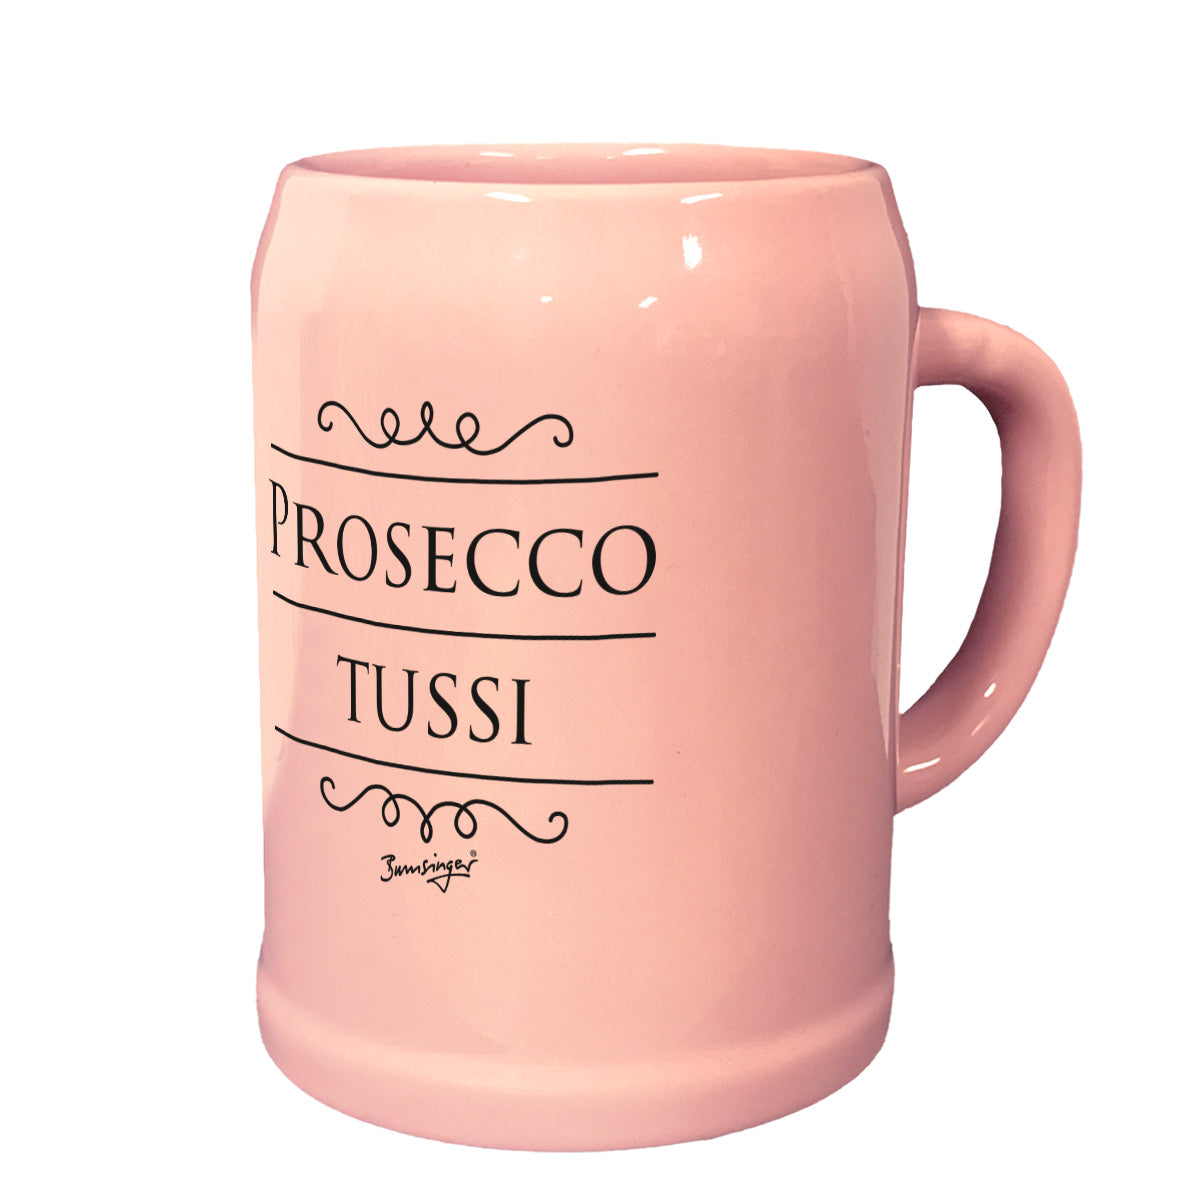 Rosa Krug Prosecco Tussi 0,25l